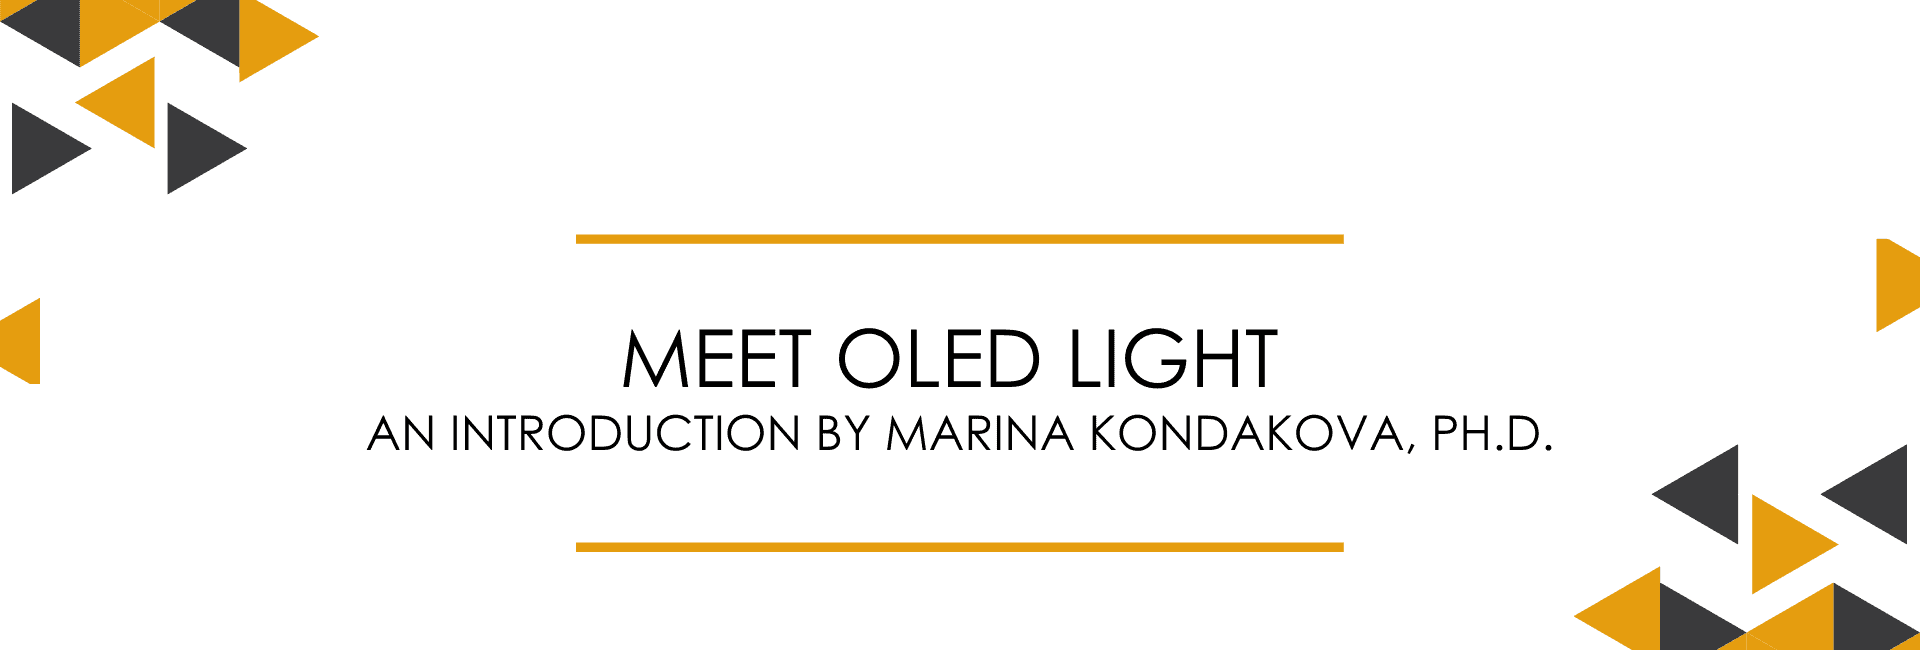 Meet OLED Light: An Introduction by Marina Kondakova, Ph.D.